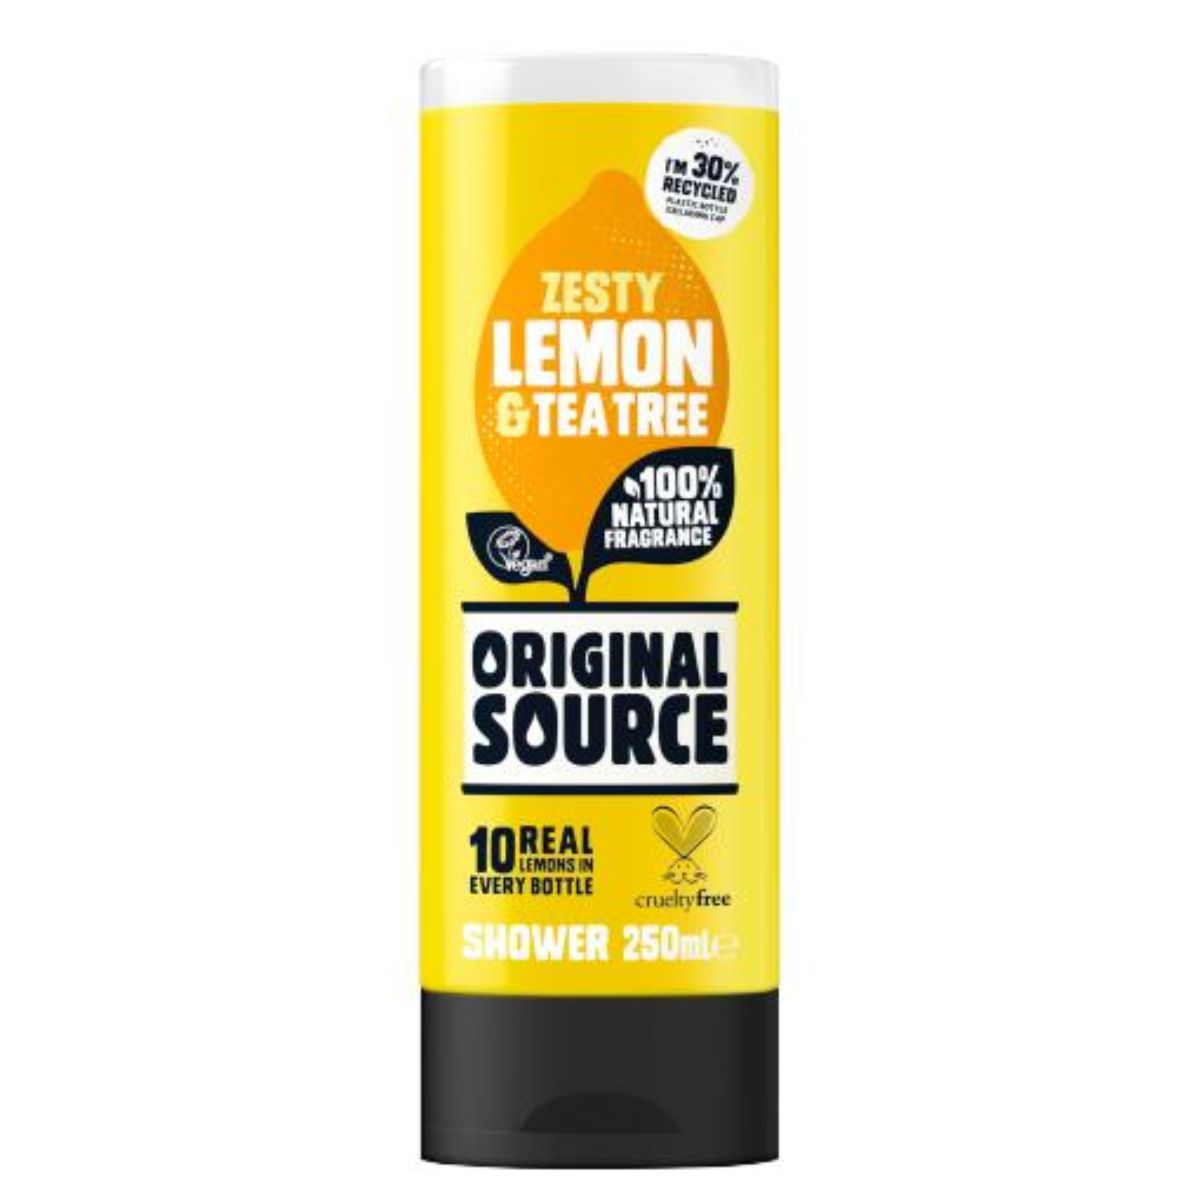 Original Source - Lemon & Tea Tree Shower Gel - 250ml